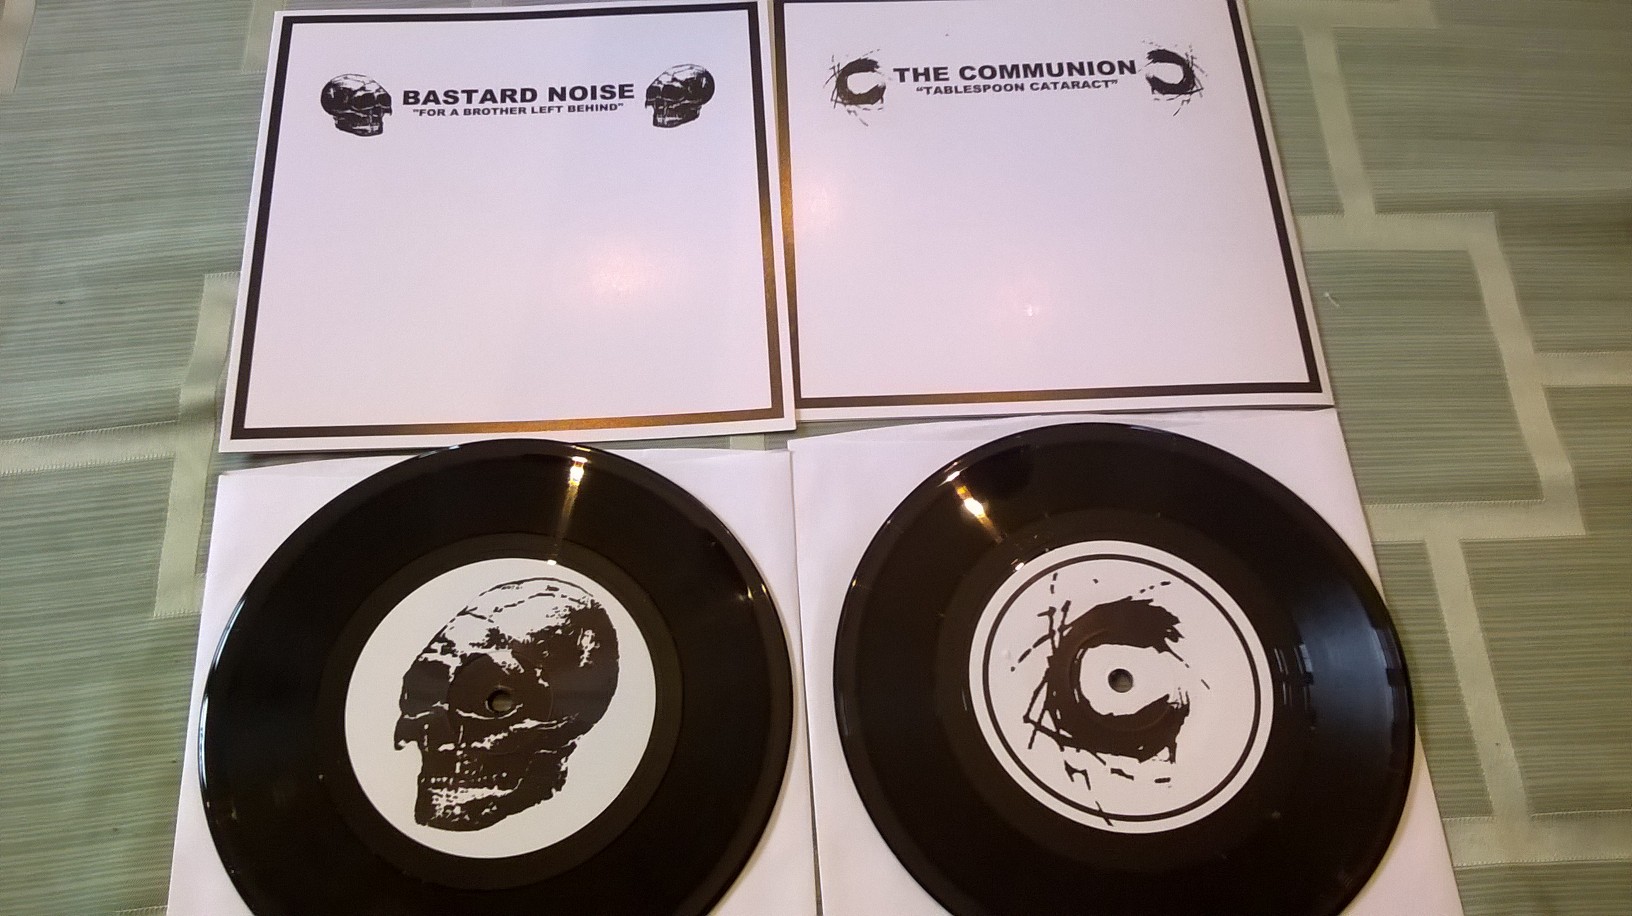 BASTARD NOISE / THE COMMUNION - SPLIT 7"